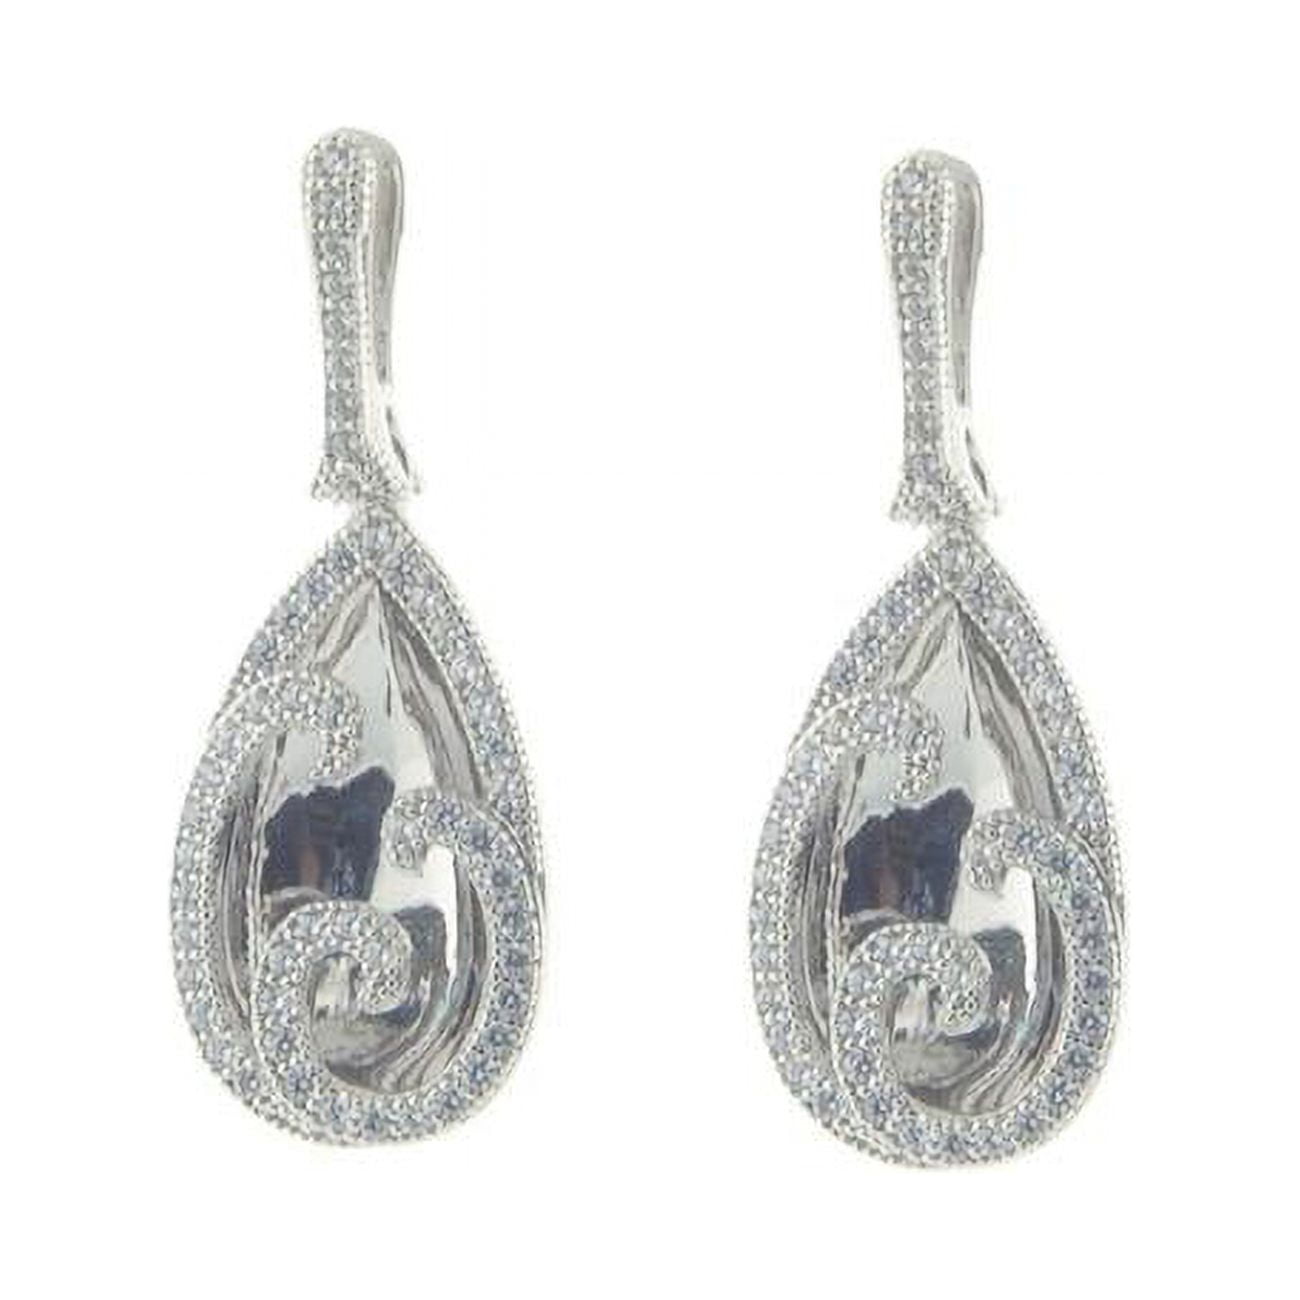 105133 Bridal Drop Cz Reflection Earrings - 925 Sterling Silver